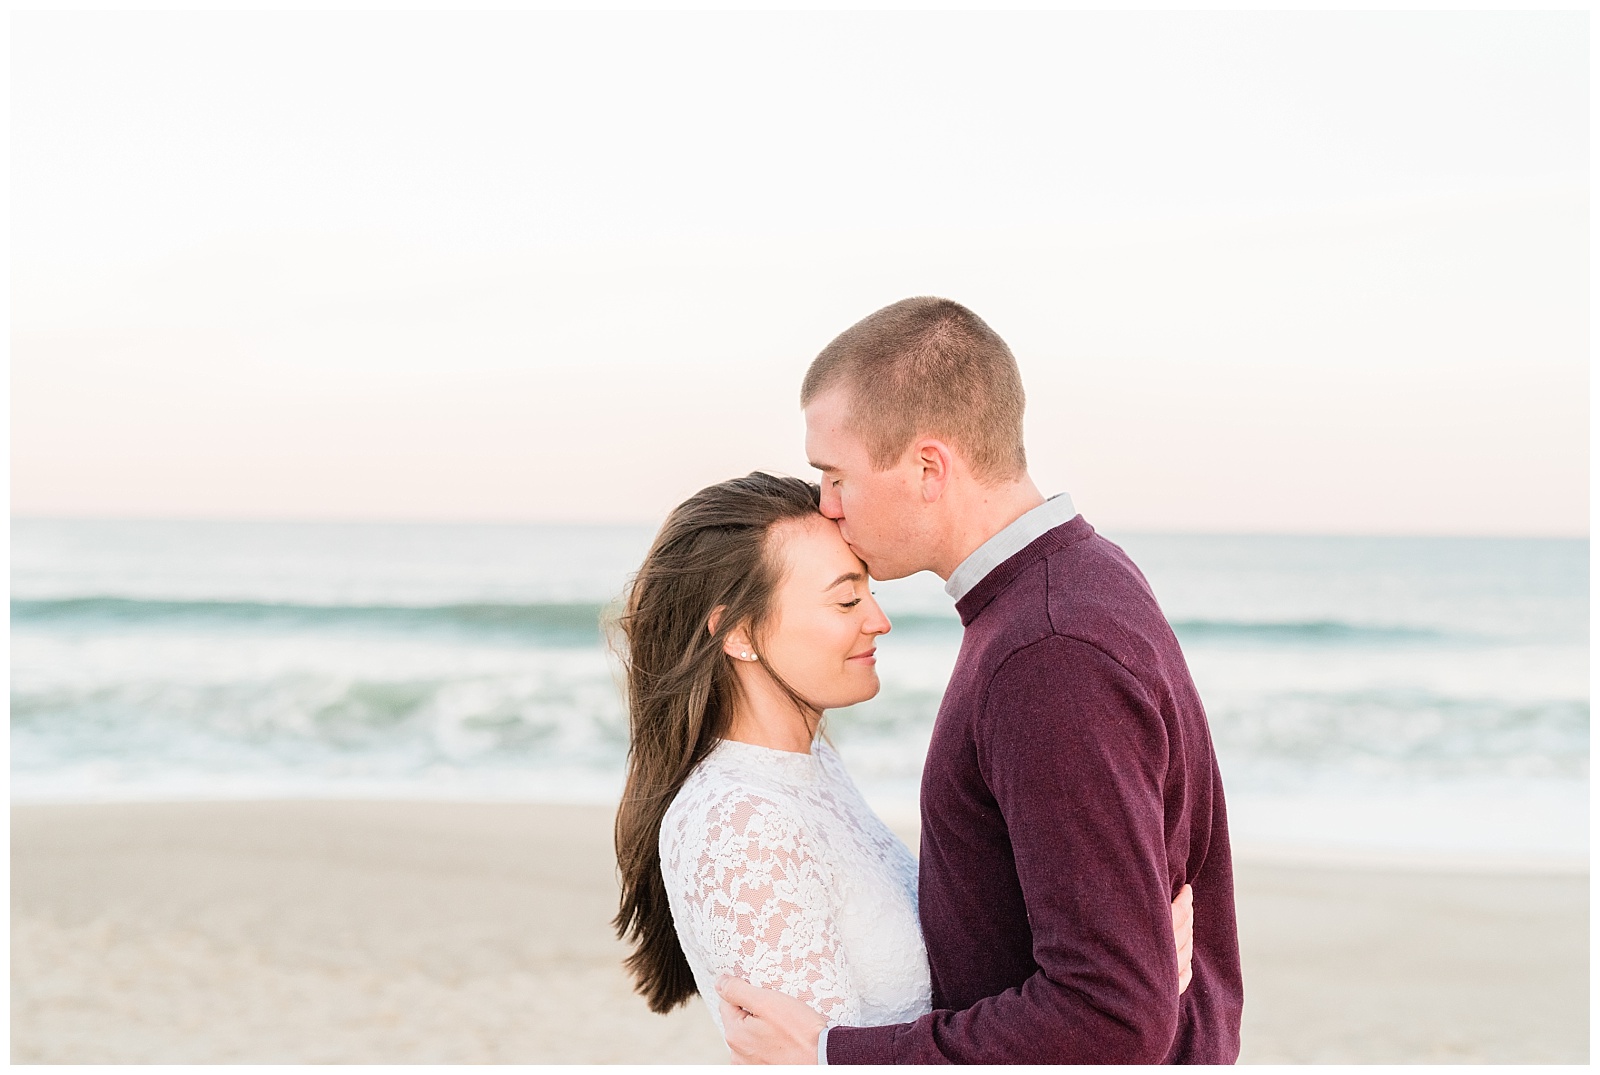 New Jersey, Engagement Session, Wedding Photographer, Beach, Sunset, Shore, Ocean